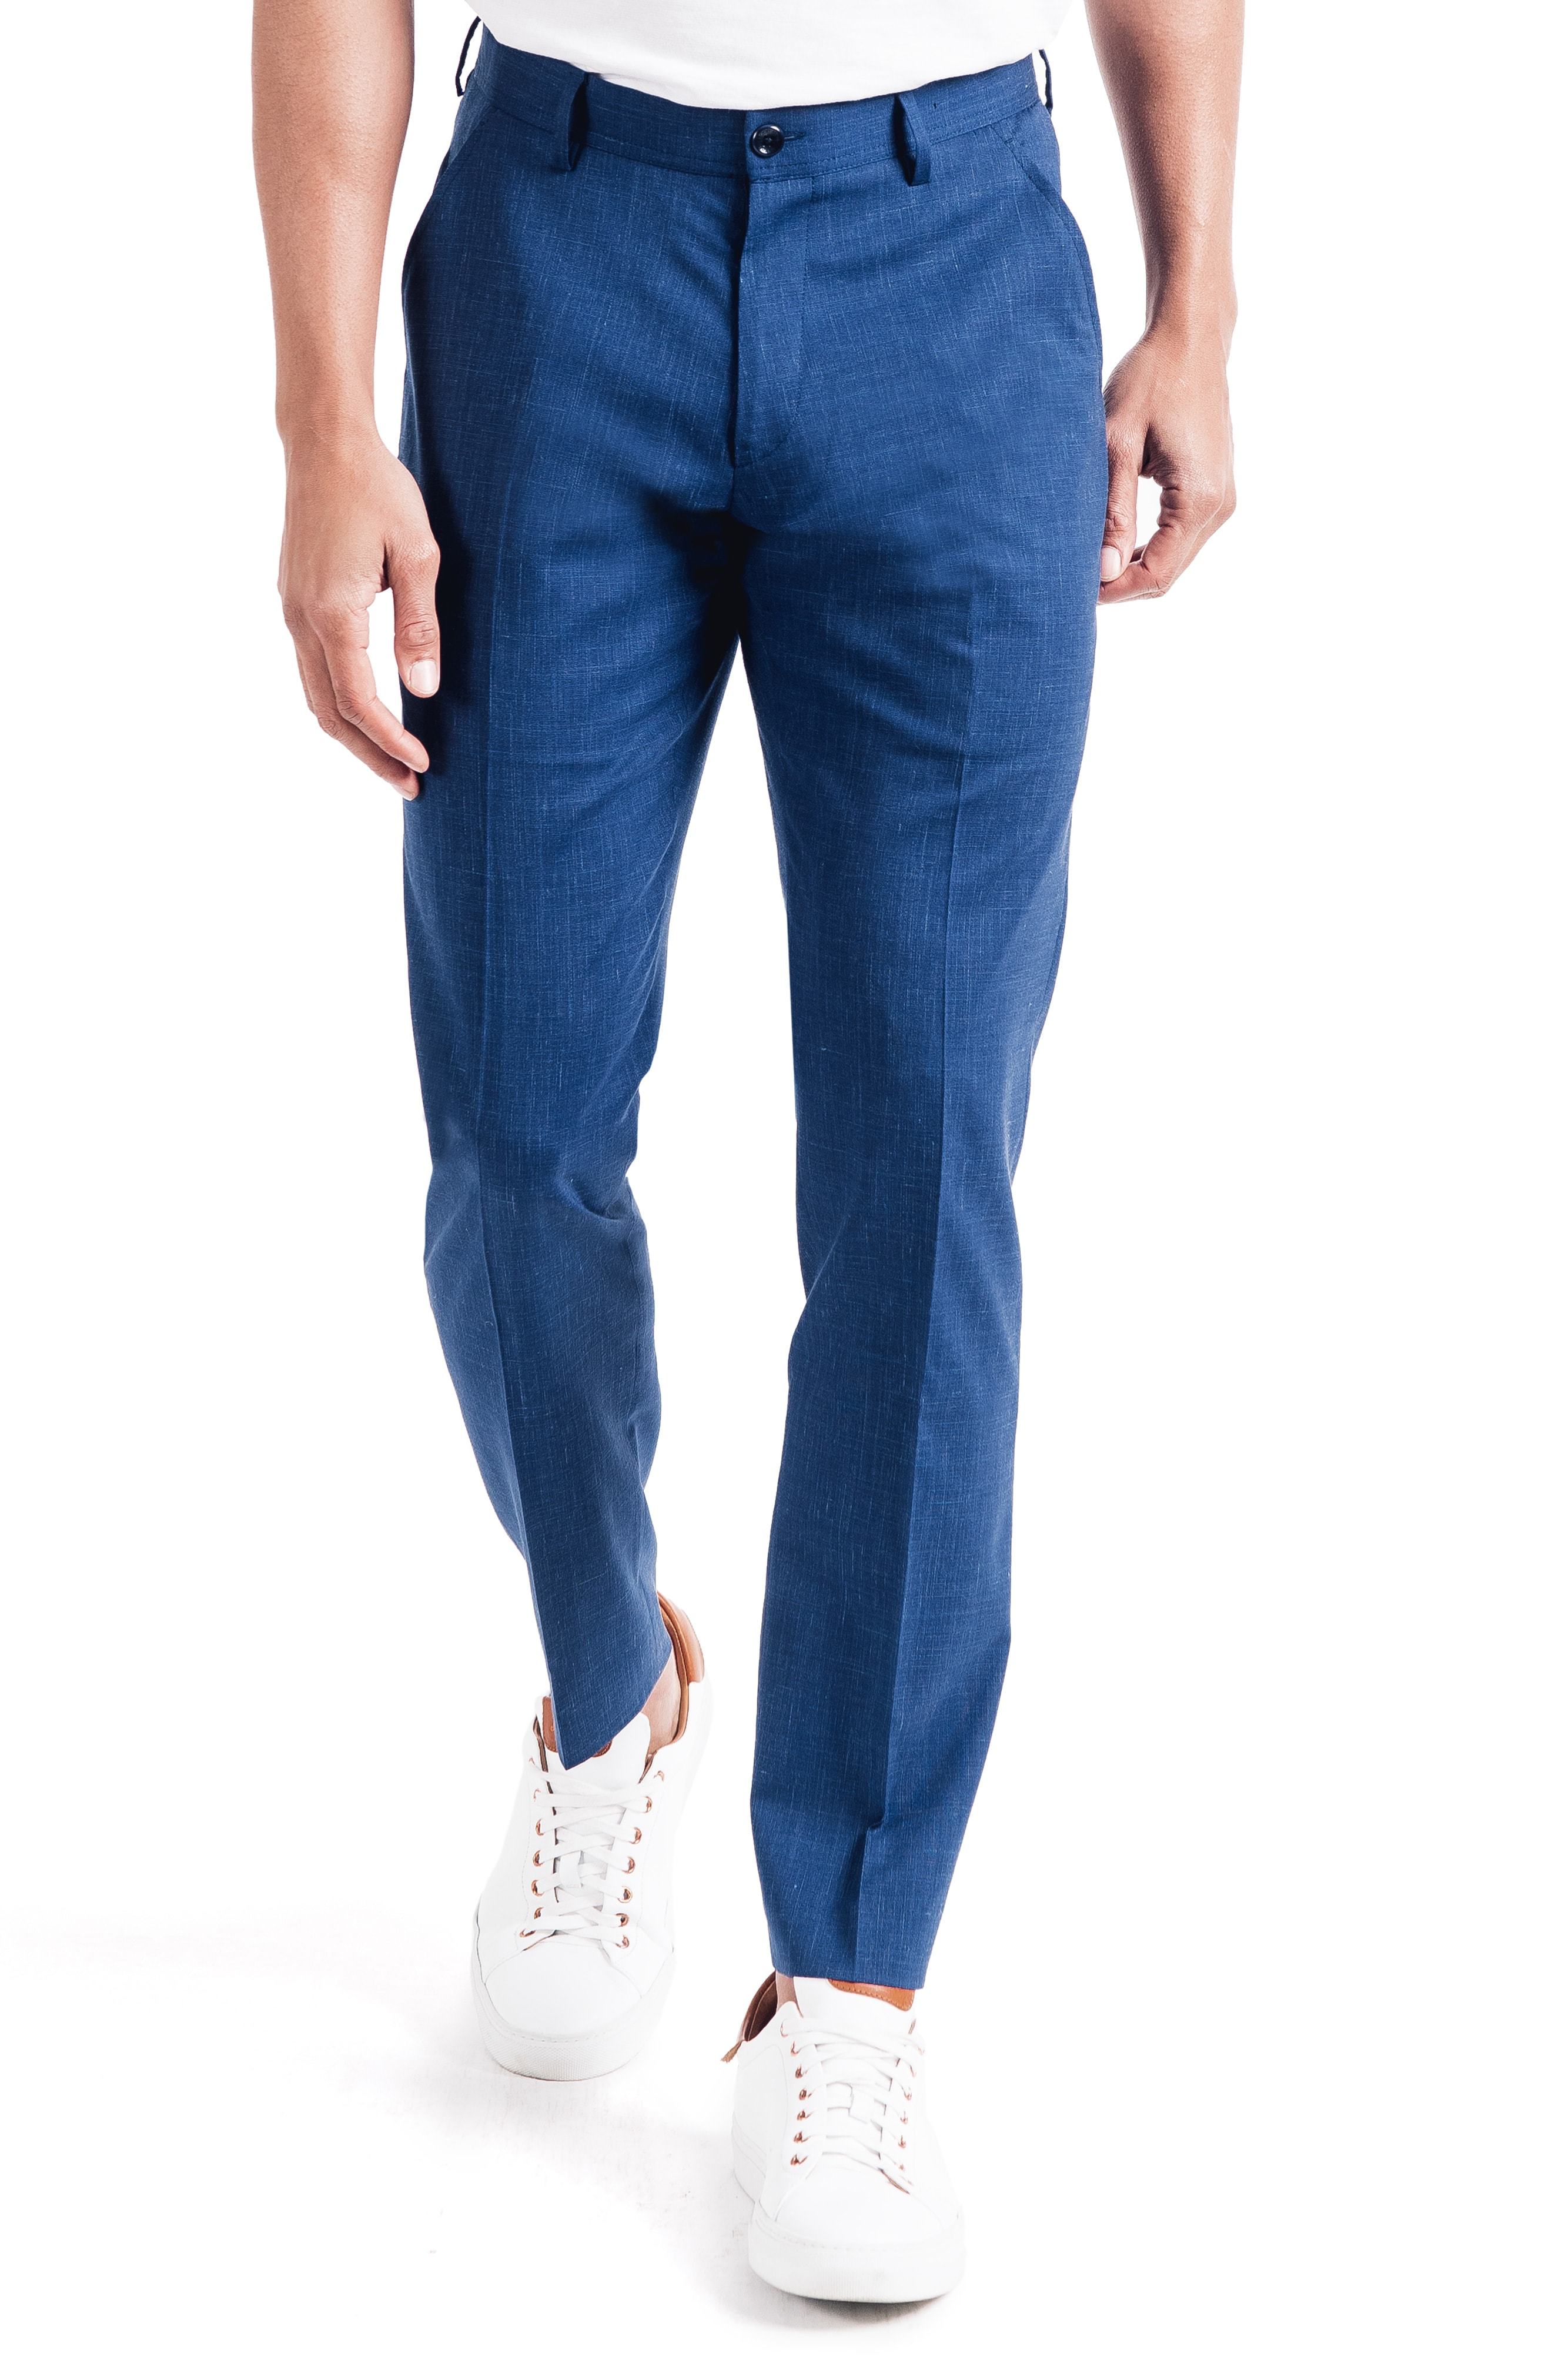 GANT Grey Stretch Linen Slim Slouch Pants Trousers Size EU 44 UK 16 US 14 |  eBay